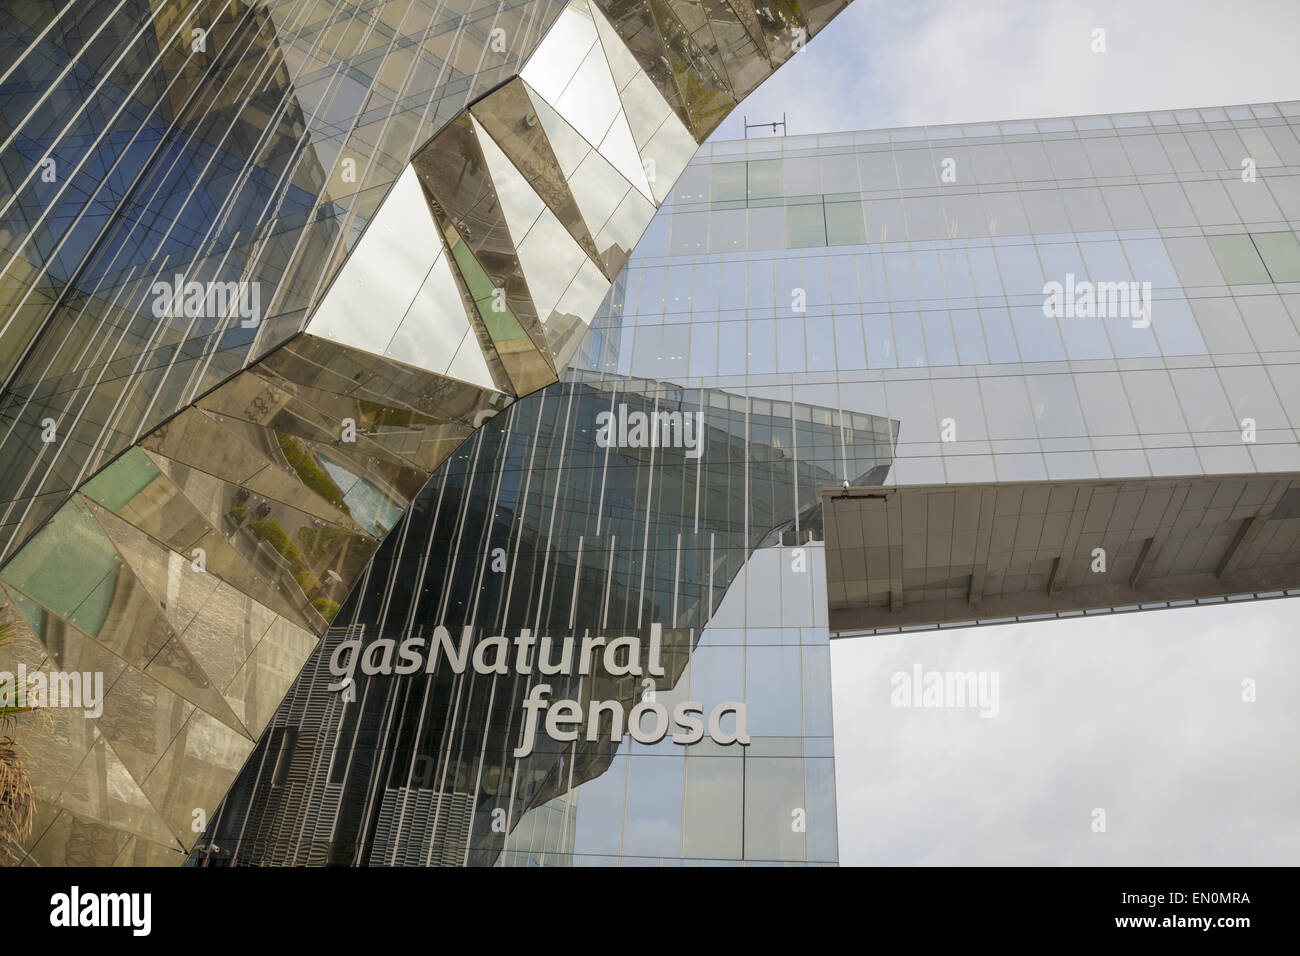 Gas Natural Fenosa headquarters, Barcelona, Catalonia, Spain Stock Photo